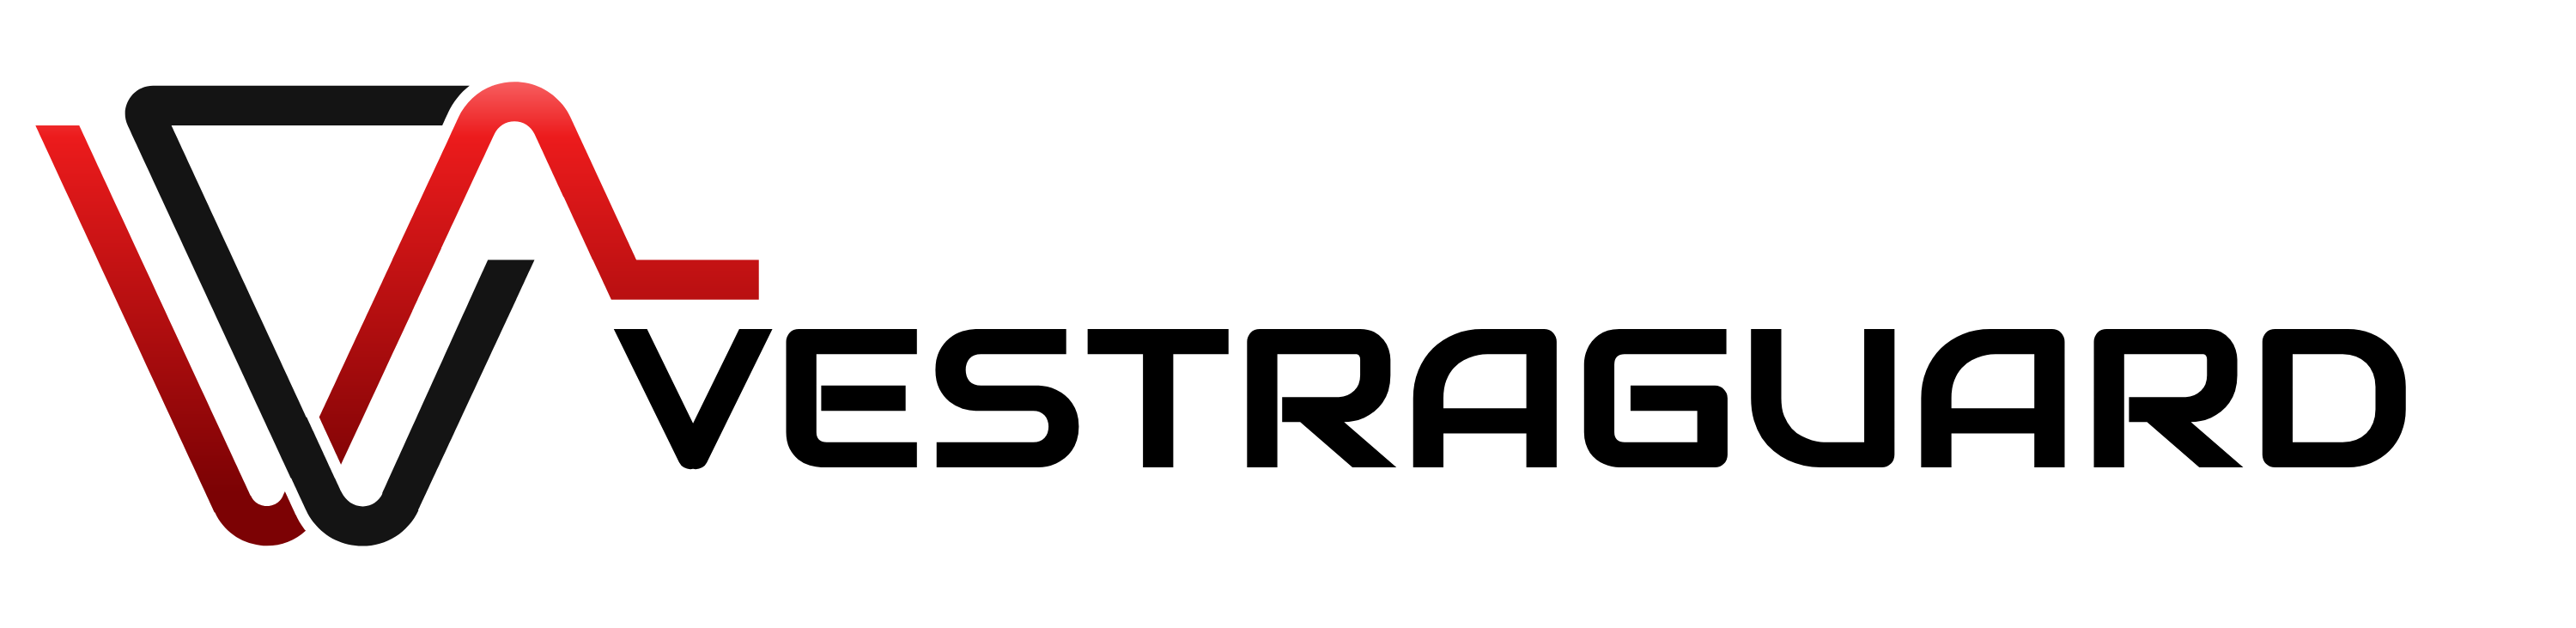 Logo Vestraguard